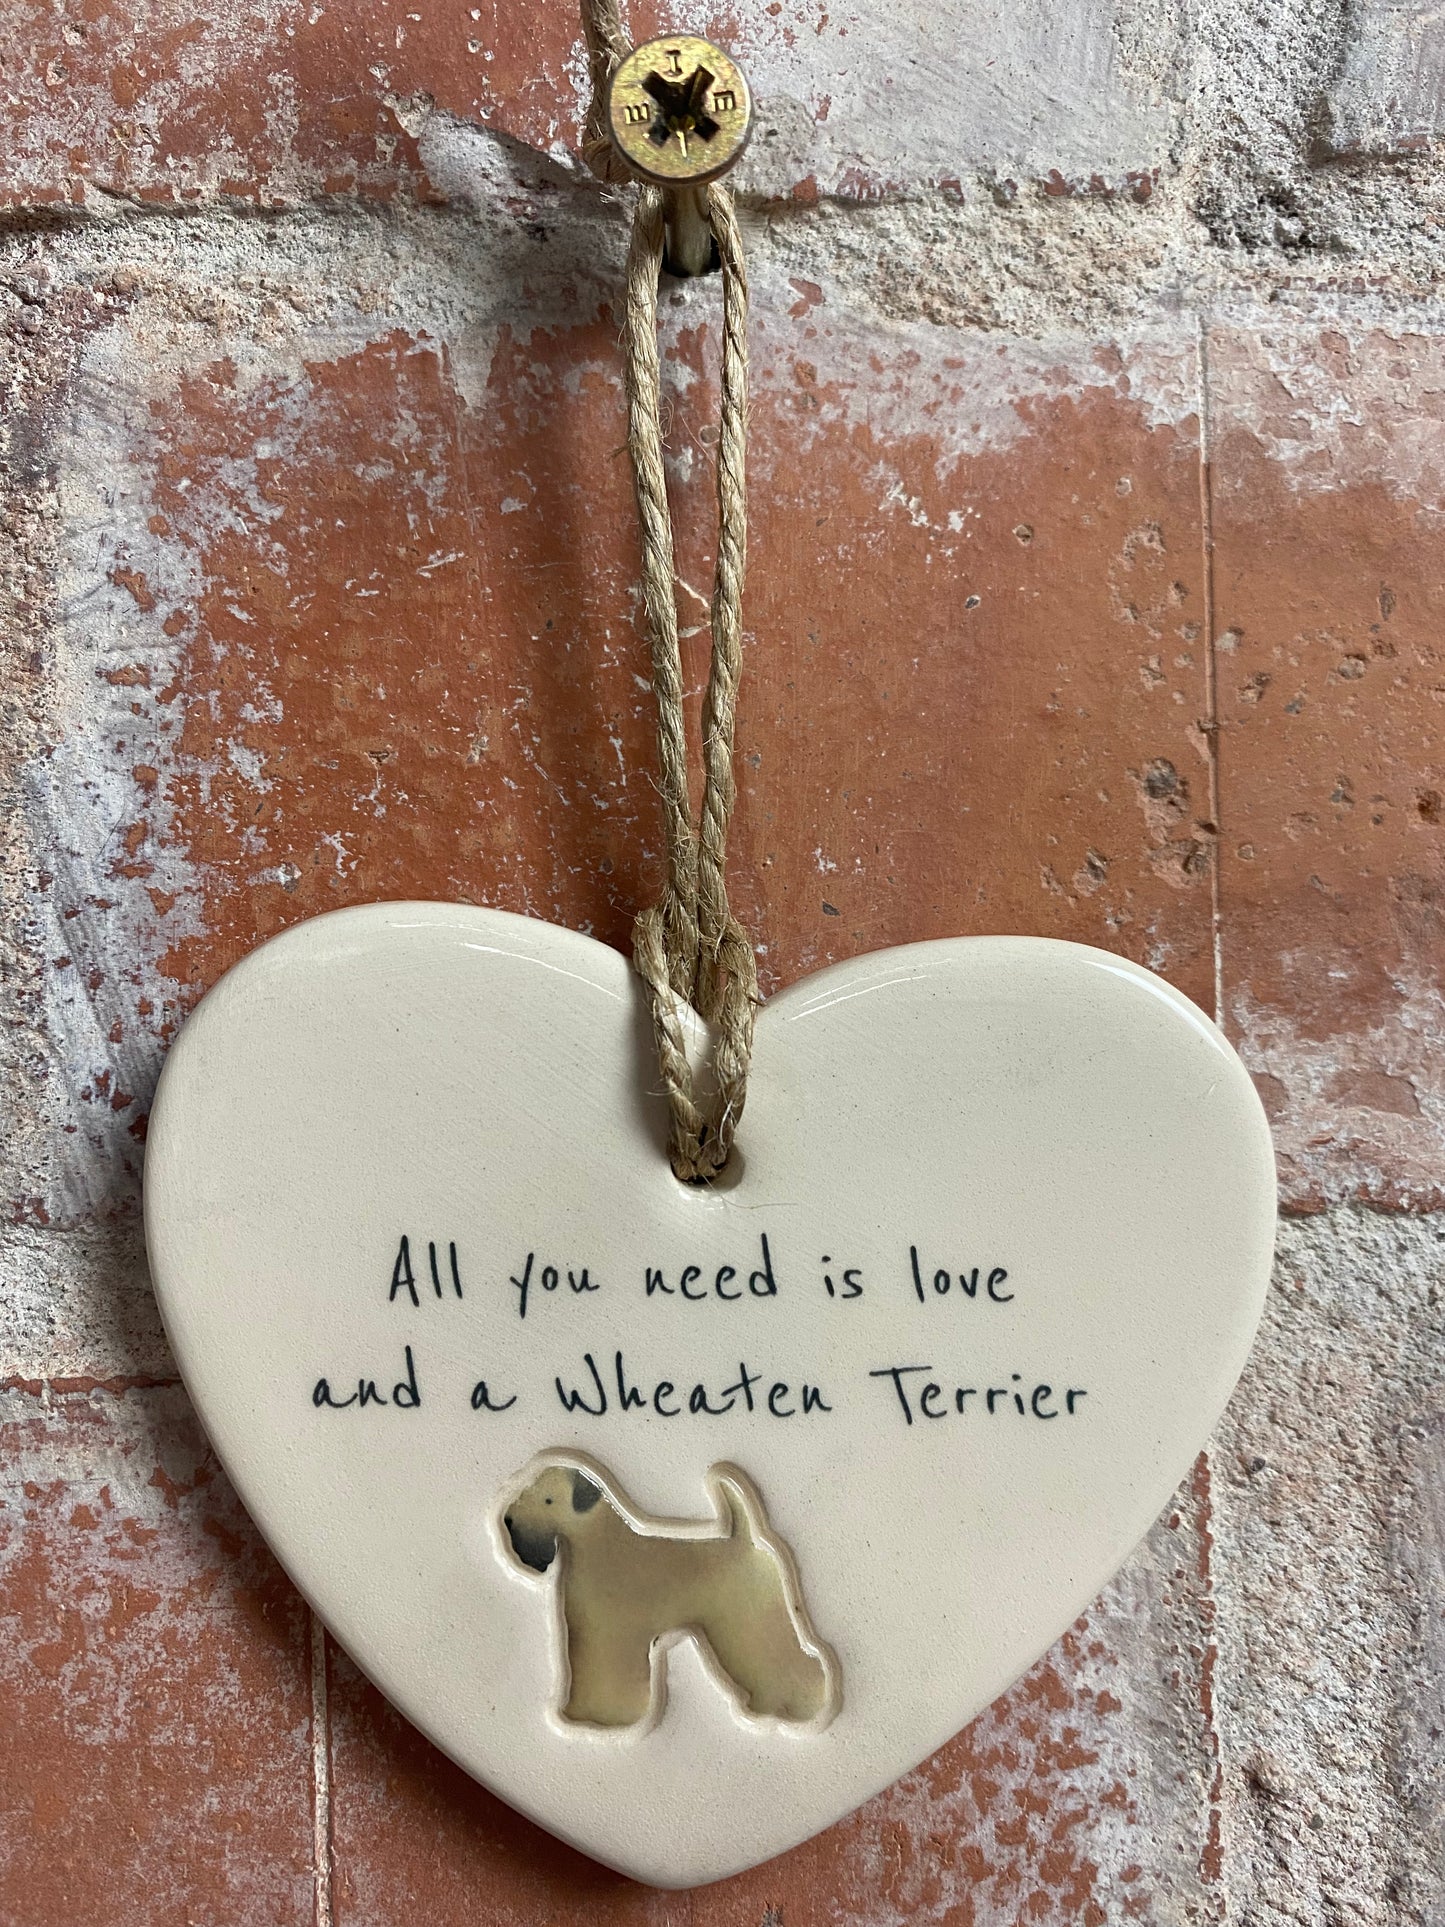 Wheaten Terrier ceramic heart